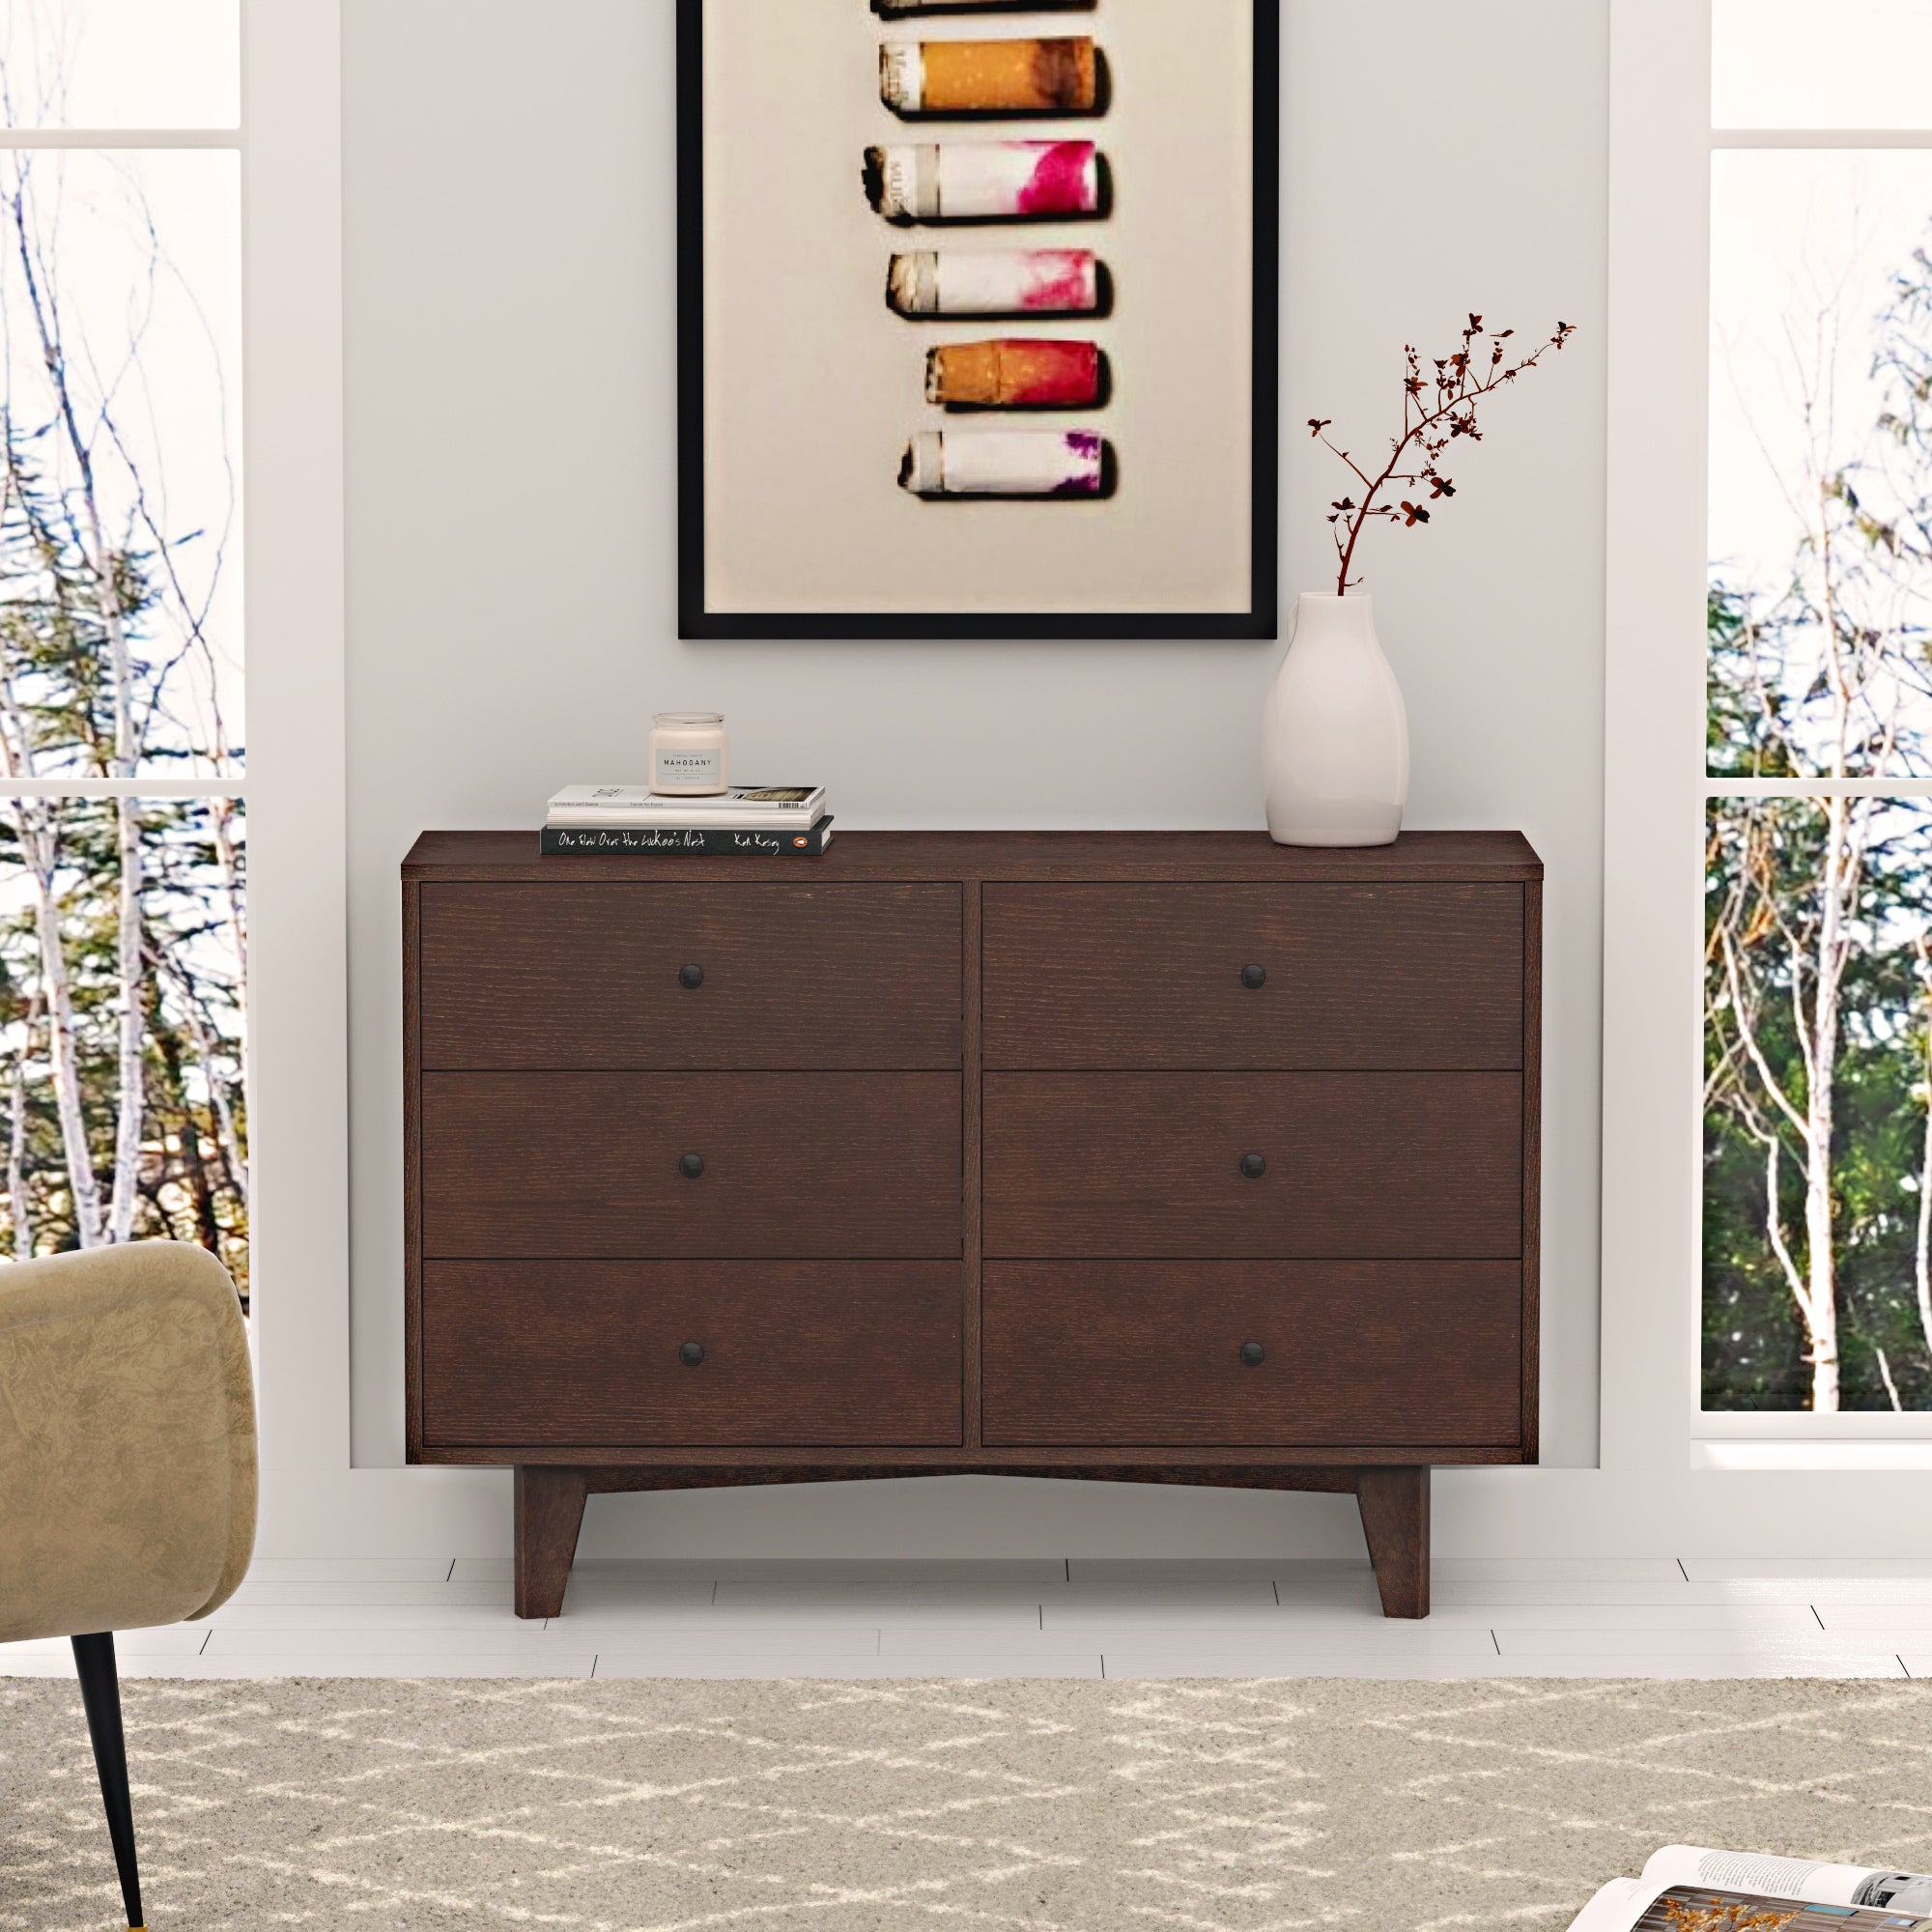 6 Drawers Wood Accent Stylish Dresser Chest and Storage Organizer- Auburn